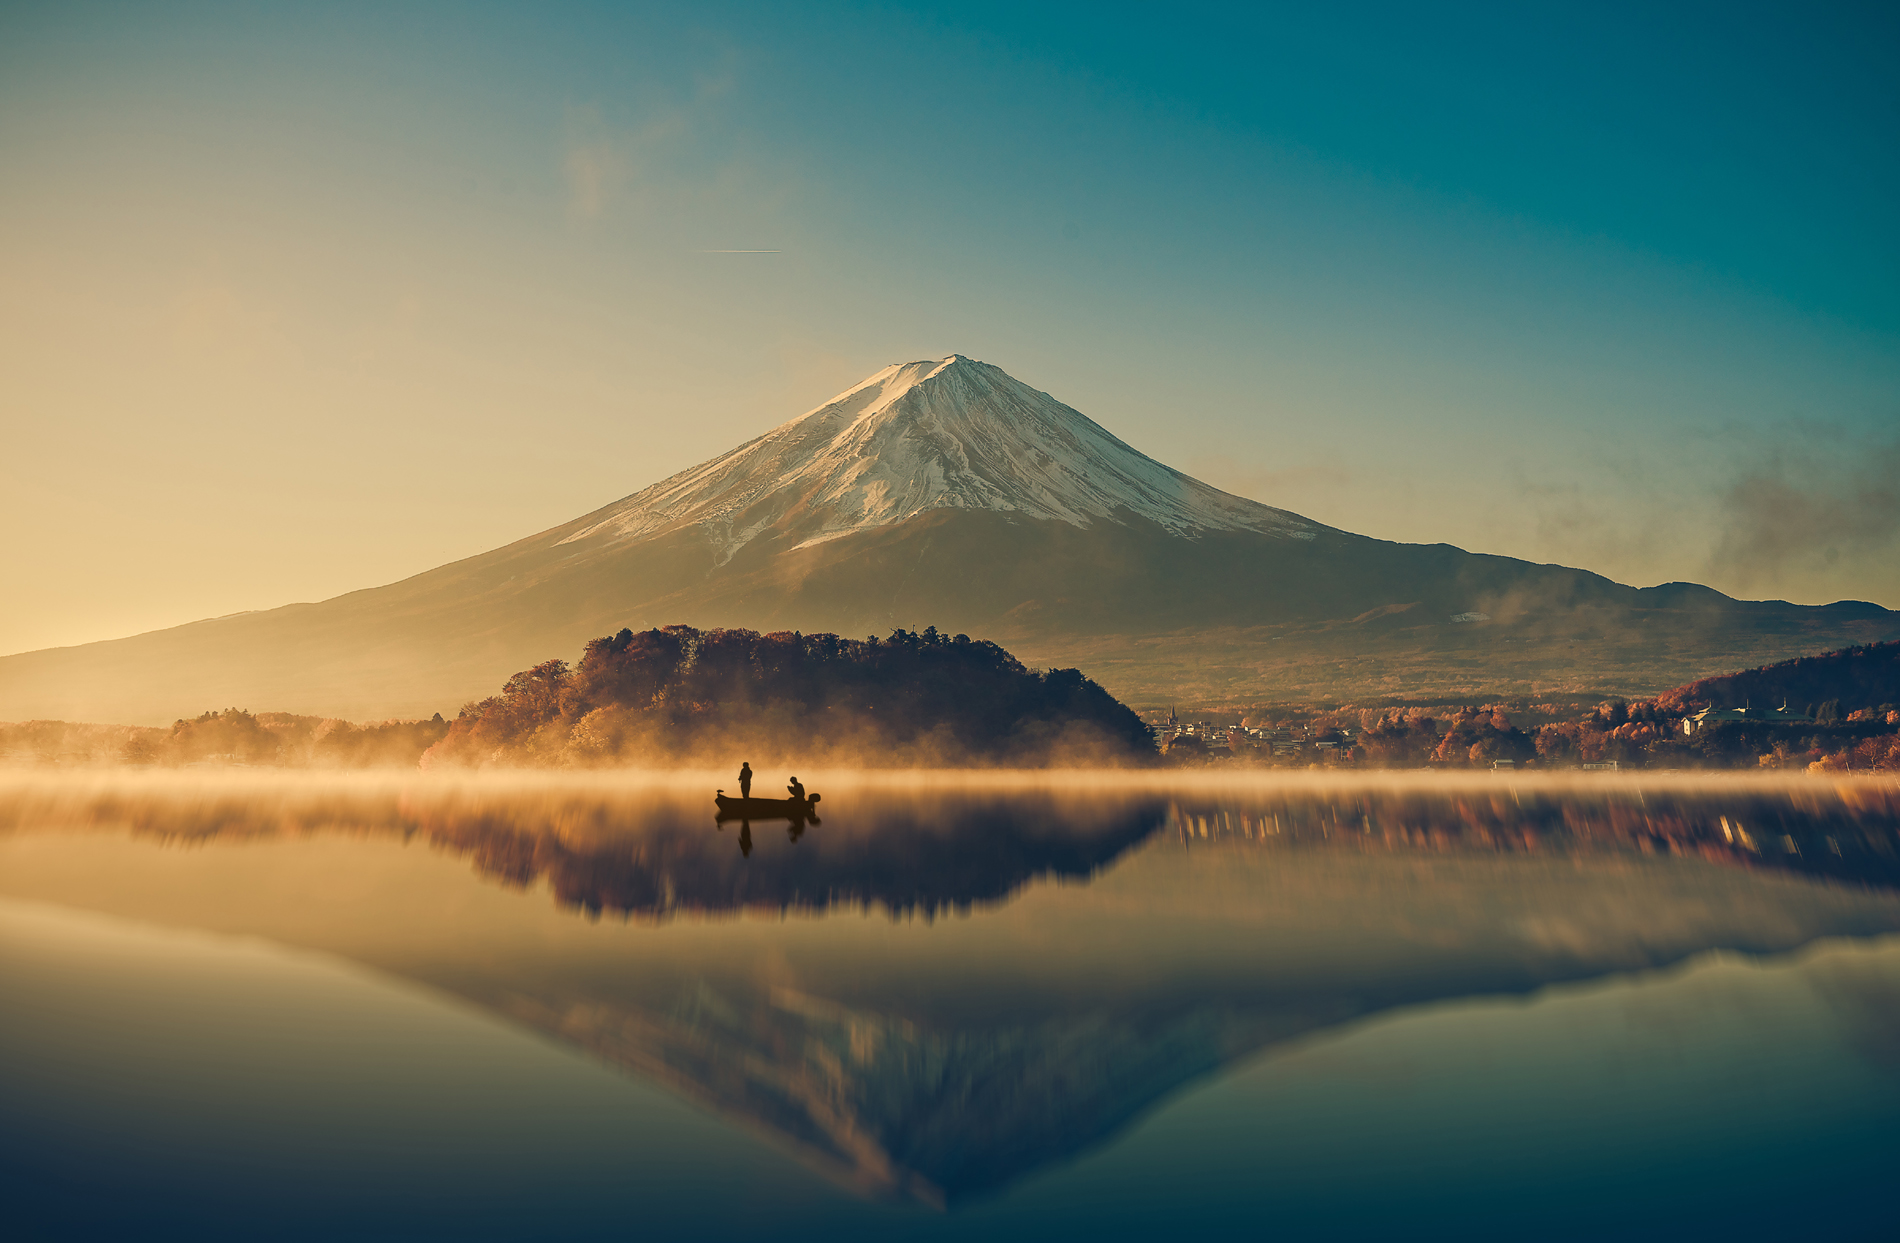 Mount Fuji and calm Lake 52559 - Landscapes - Landscape scenery